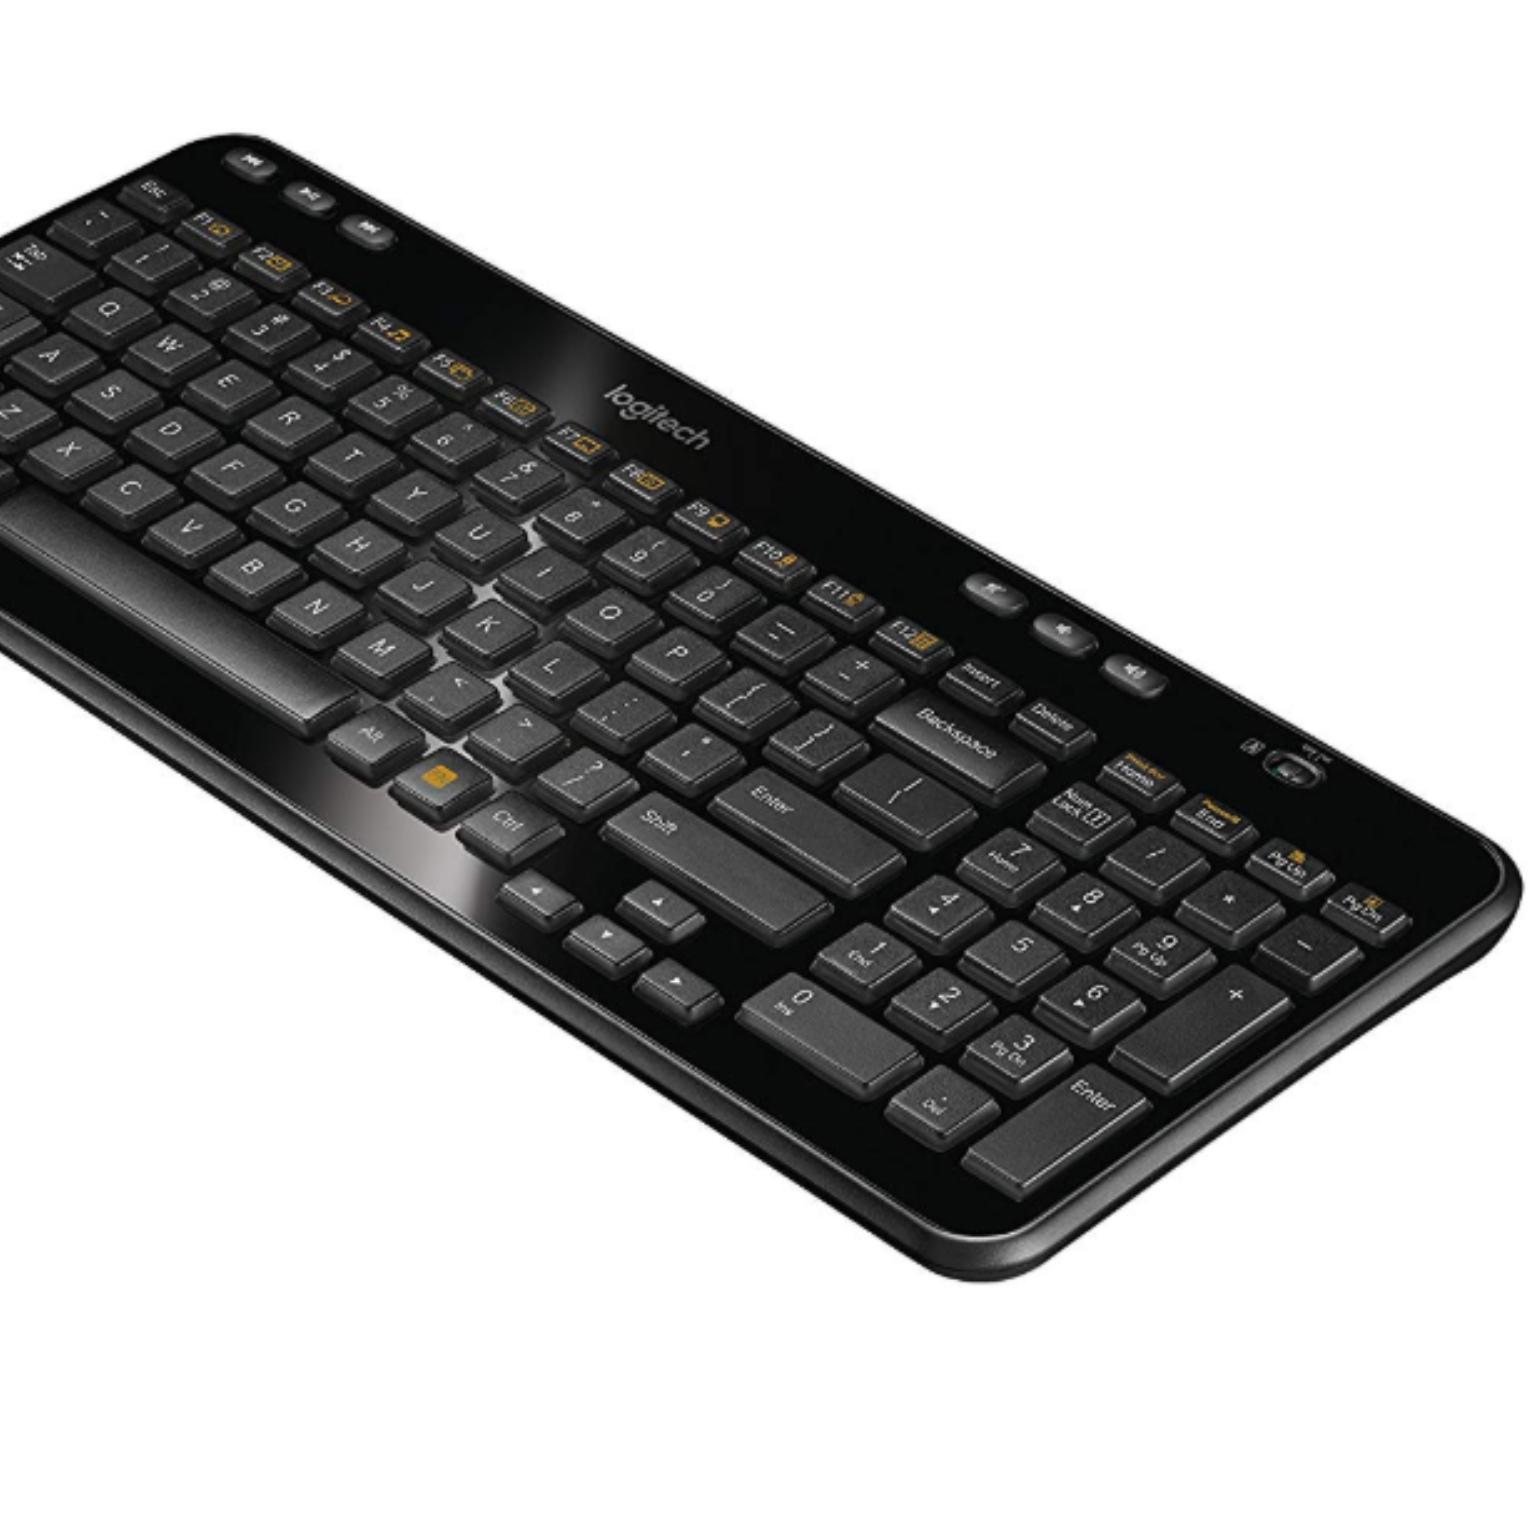 Draadloos toetsenbord - Logitech - Merk: Logitech K360, QWERTY - Aansluiting: Draadloos USB, Extra: Compact, Voeding: AA batterijen (incl)